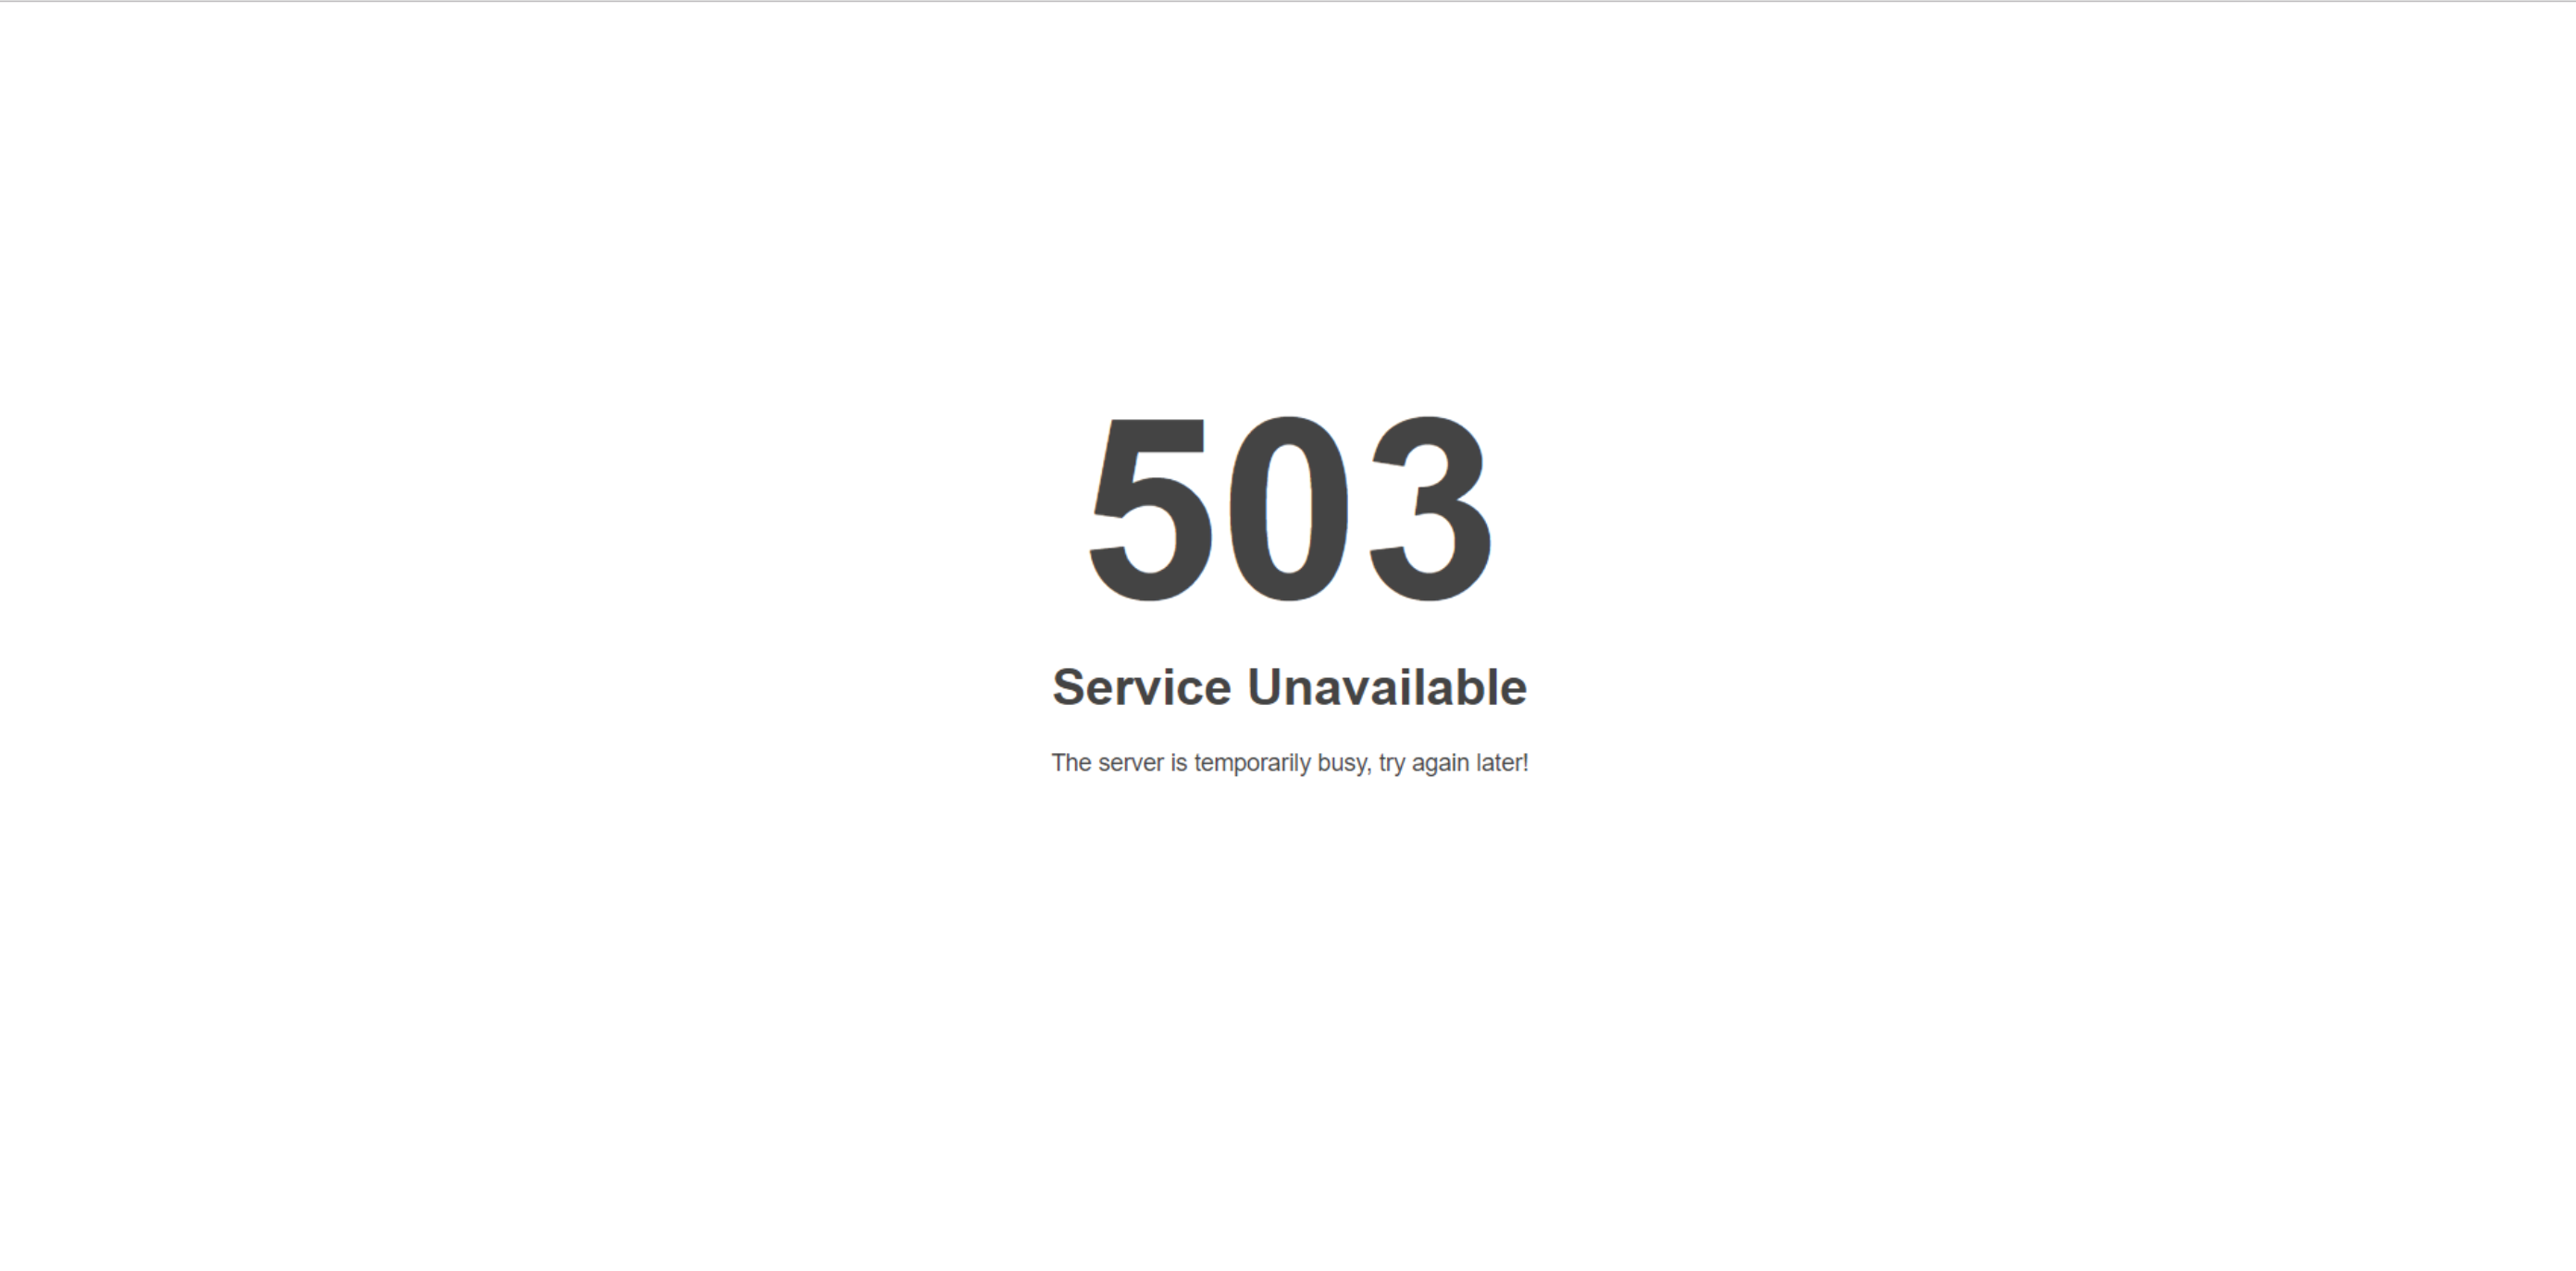 Fejlkode-503-service-unavailable